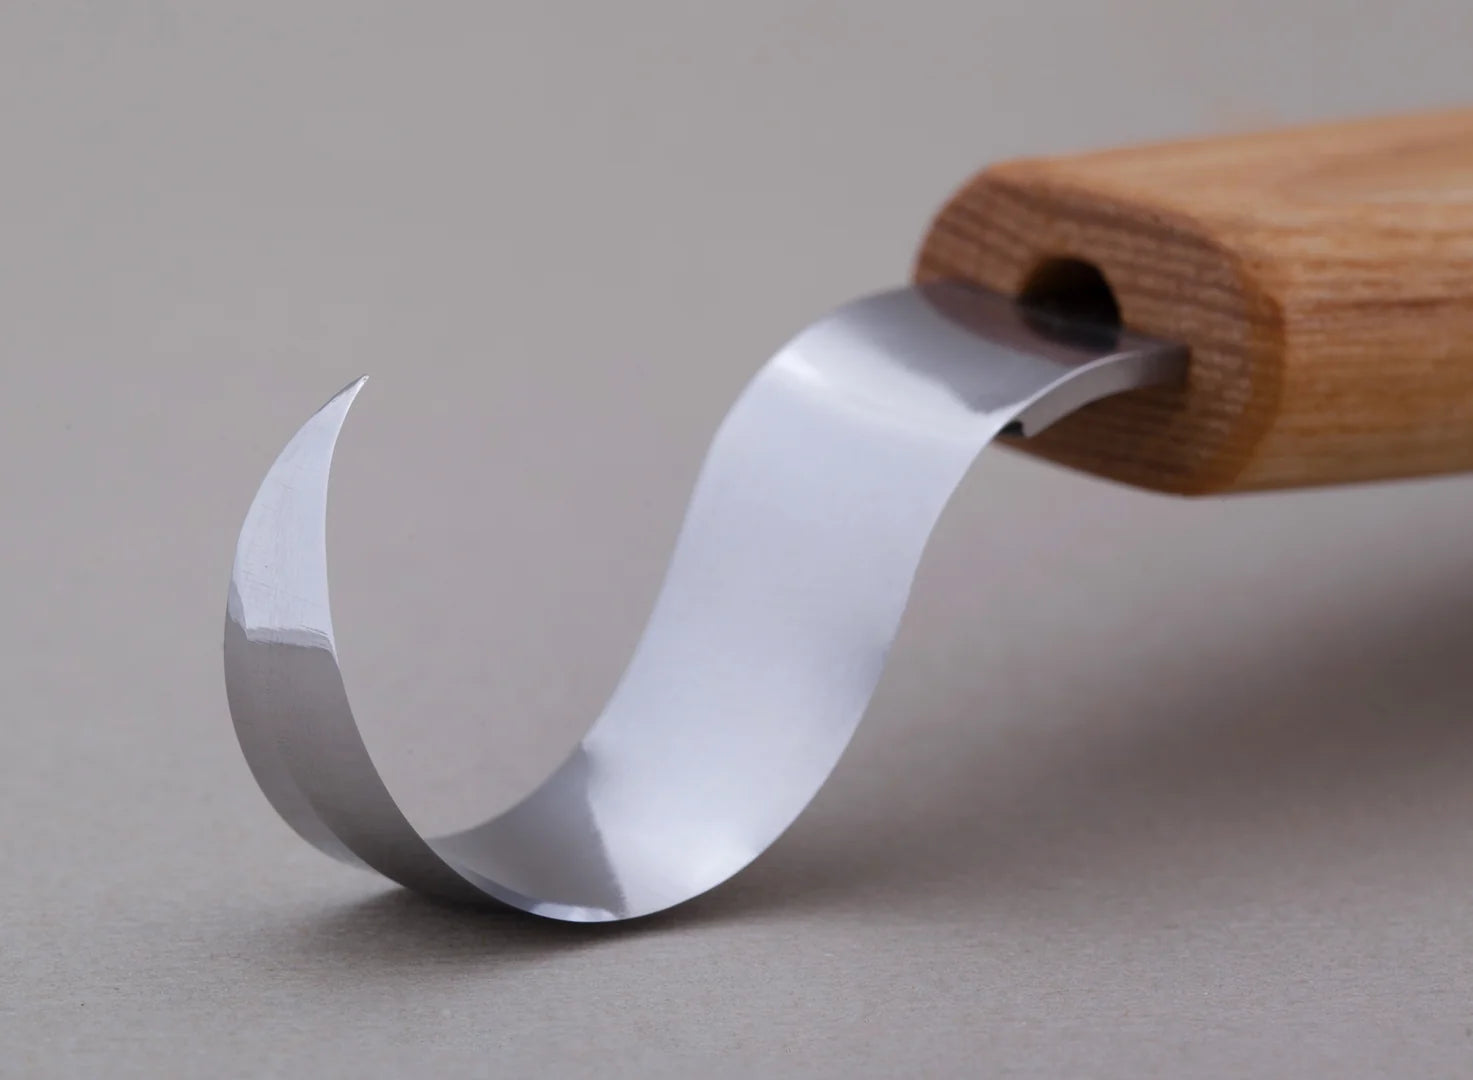 Stryi 150020 20mm Spoon Carving Hook Knife 